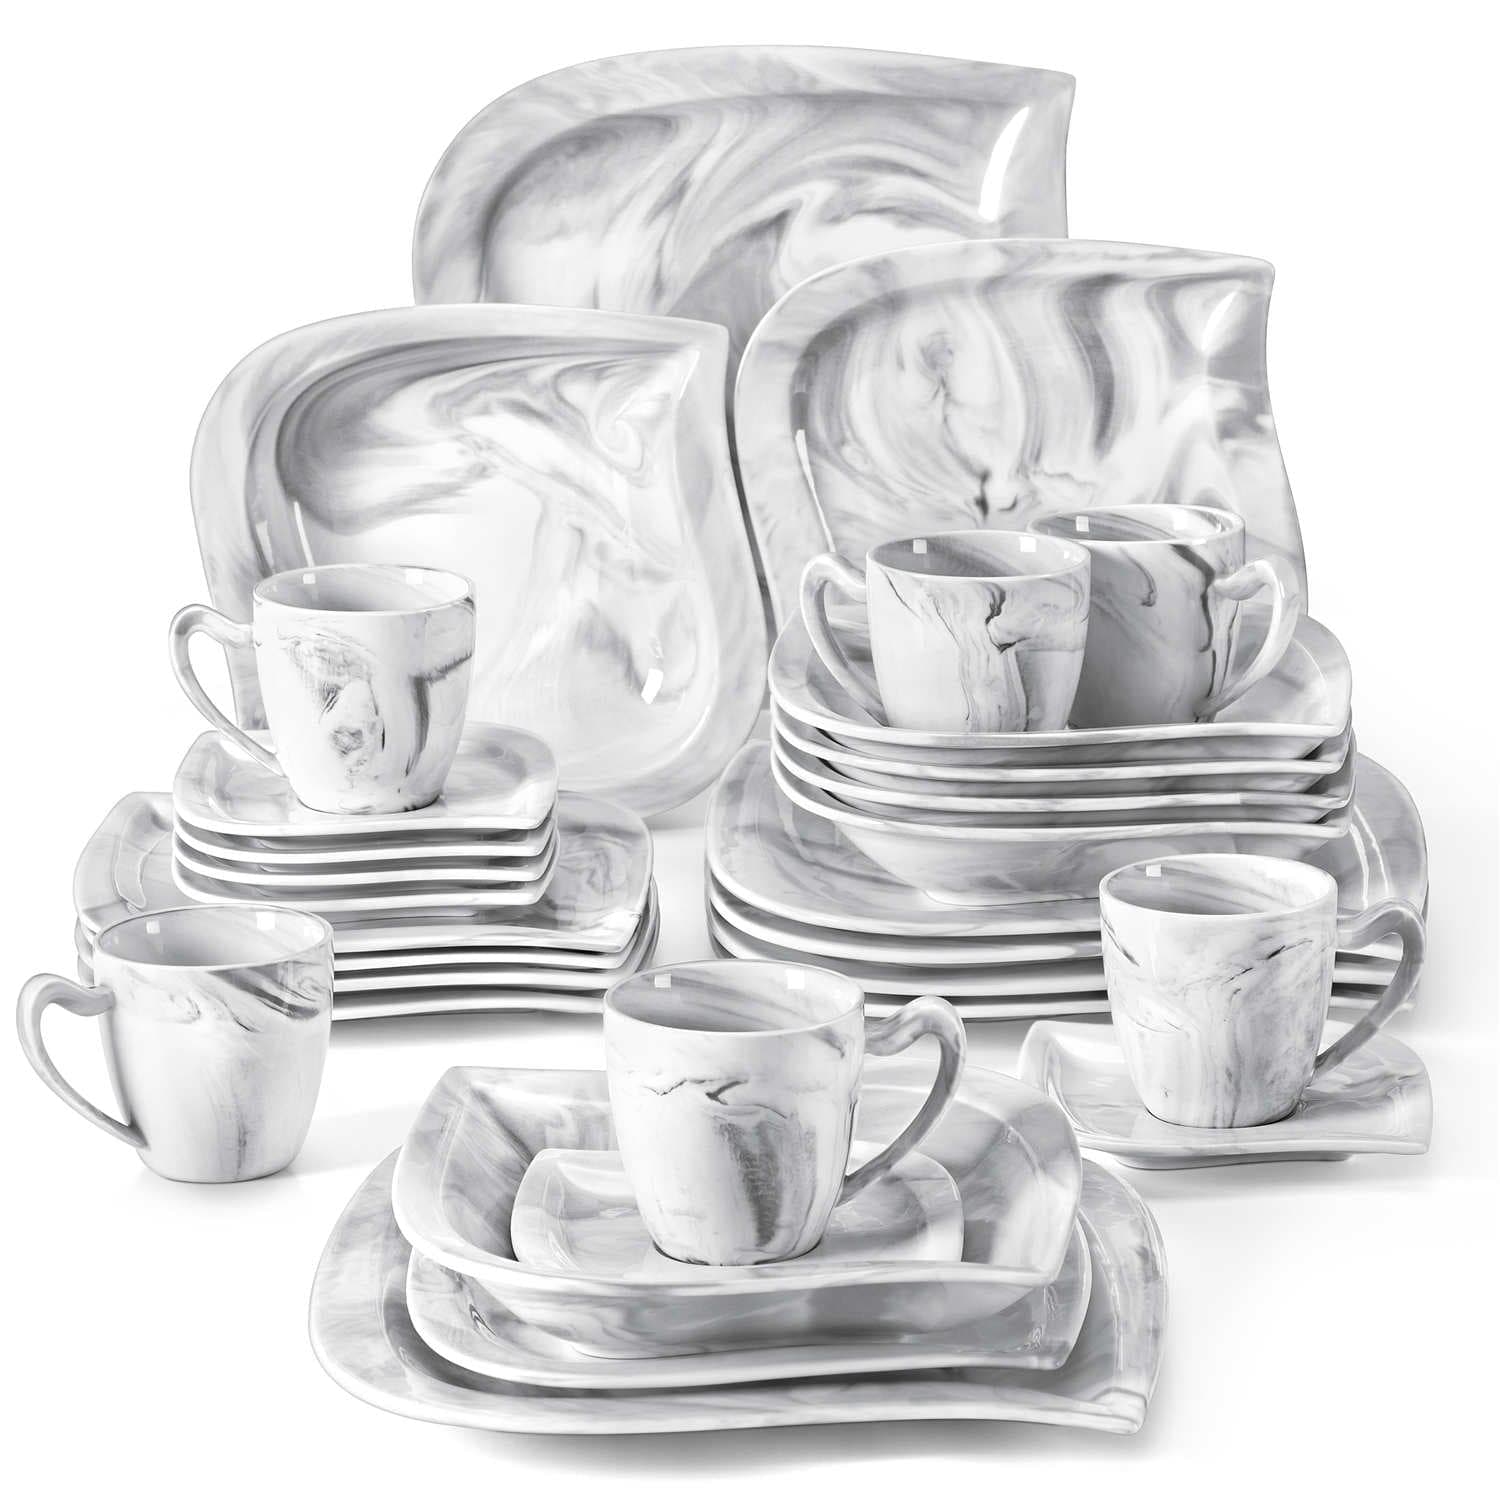 MALACASA Blance 30 Pieces Marble Grey Porcelain Dinnerware Set